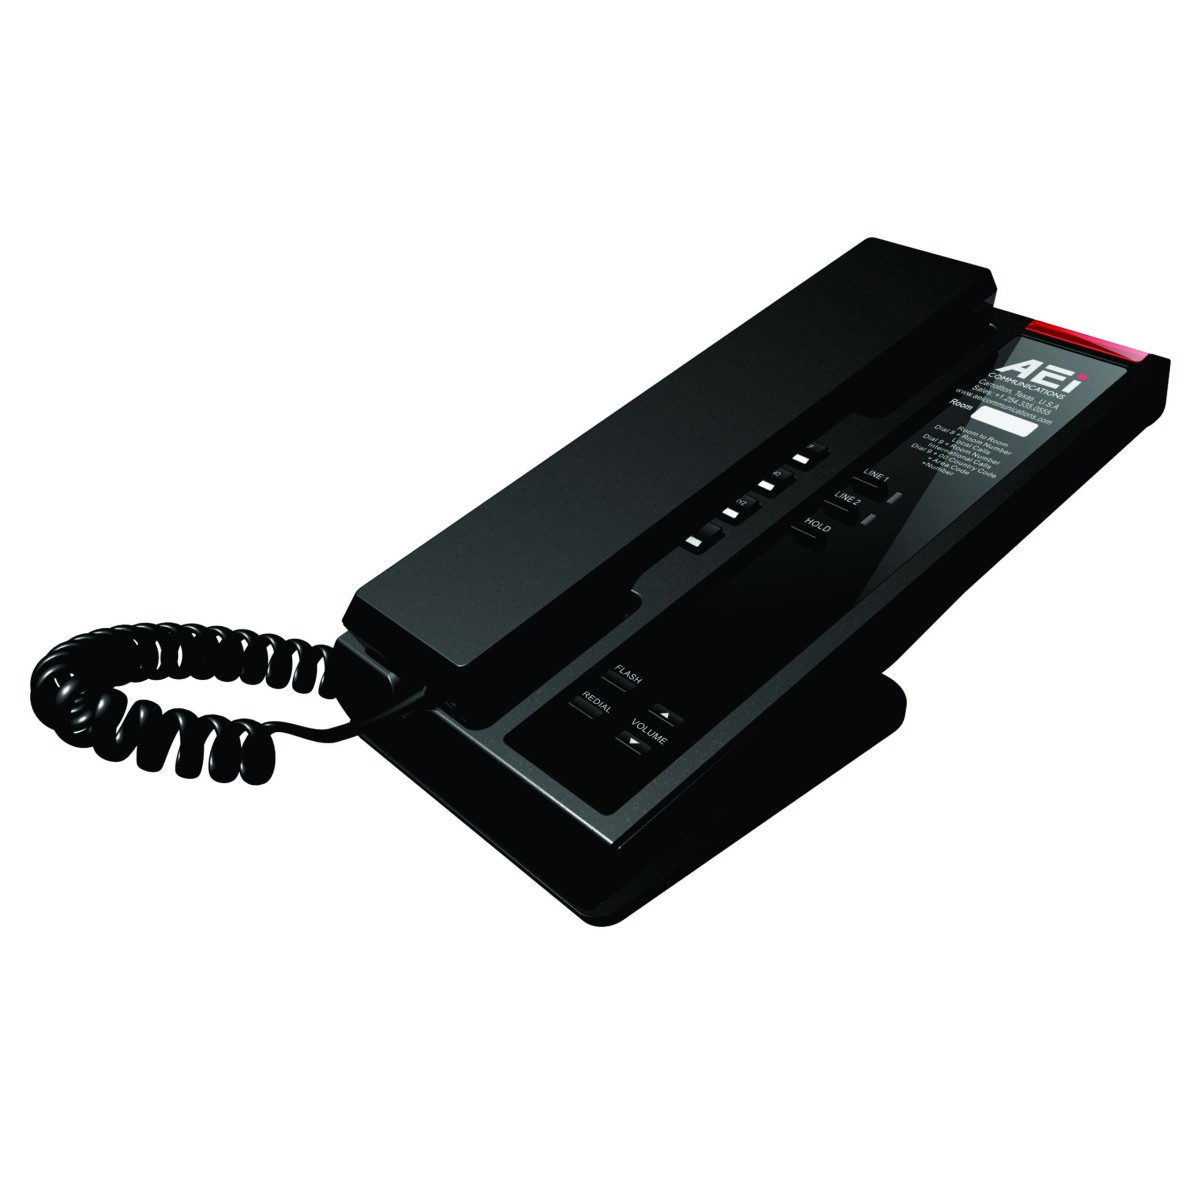 AEI ALN-5200 Slim Dual-Line Analog Corded Telephone